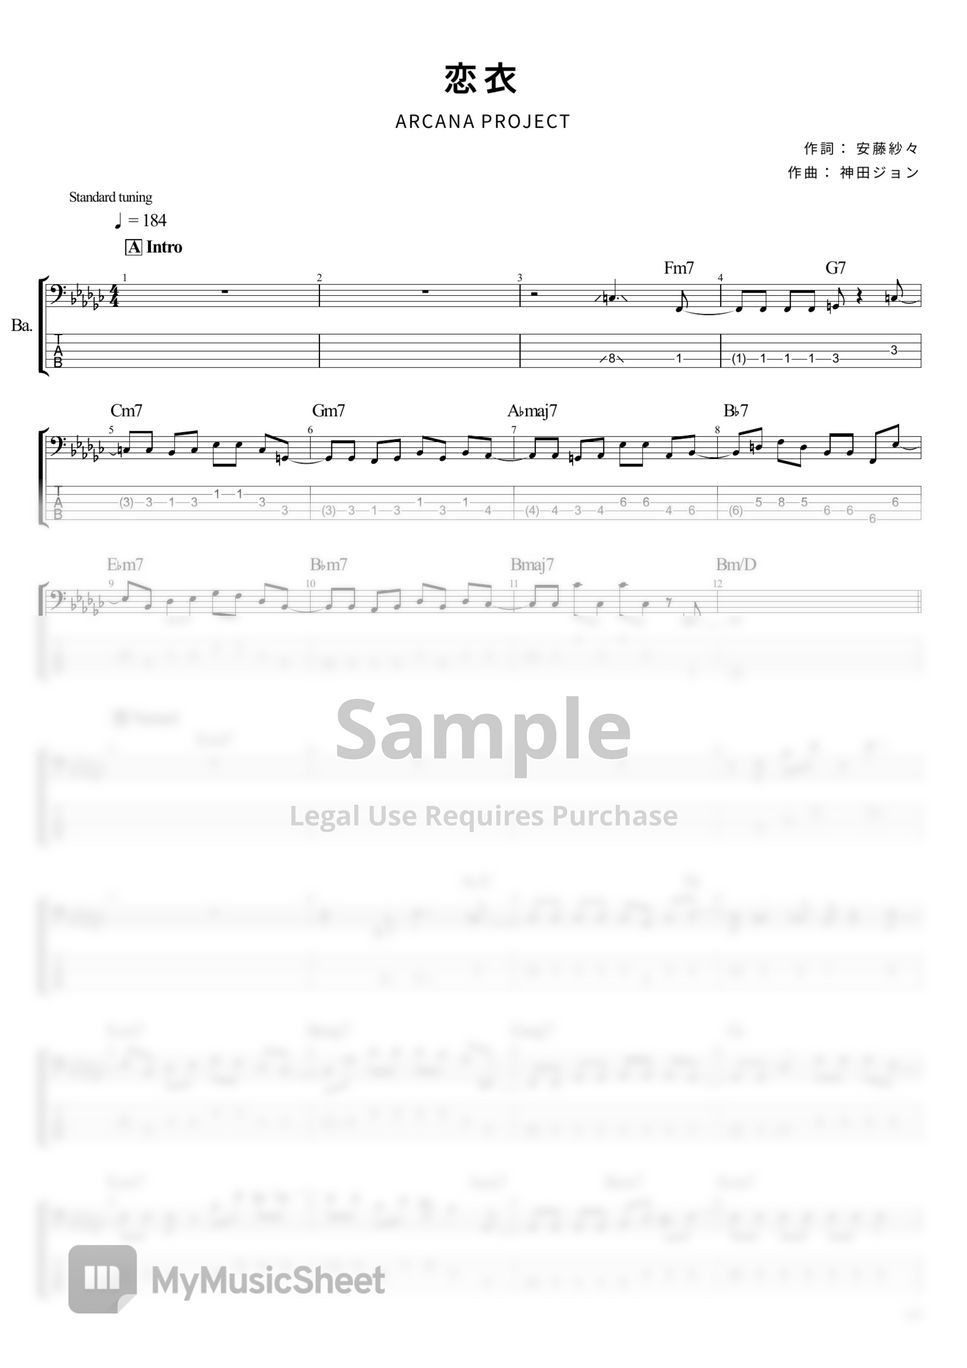 ARCANA PROJECT - 恋衣 (ベース Tab譜 5弦) by T's bass score